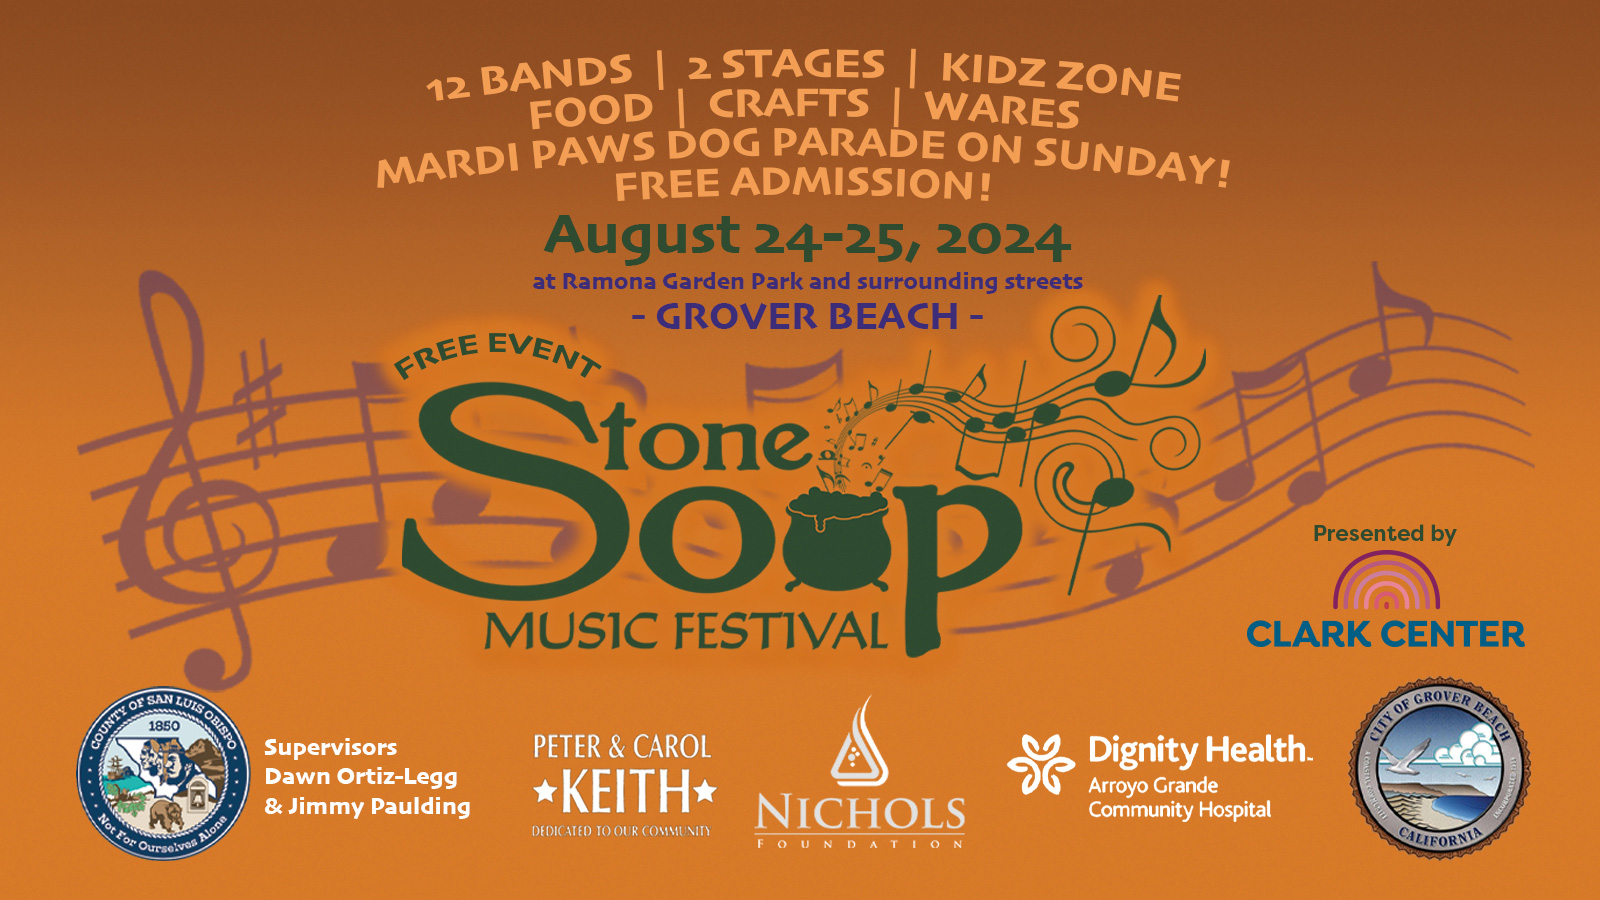 Stone Soup Music Festival | August 24-25, 2024